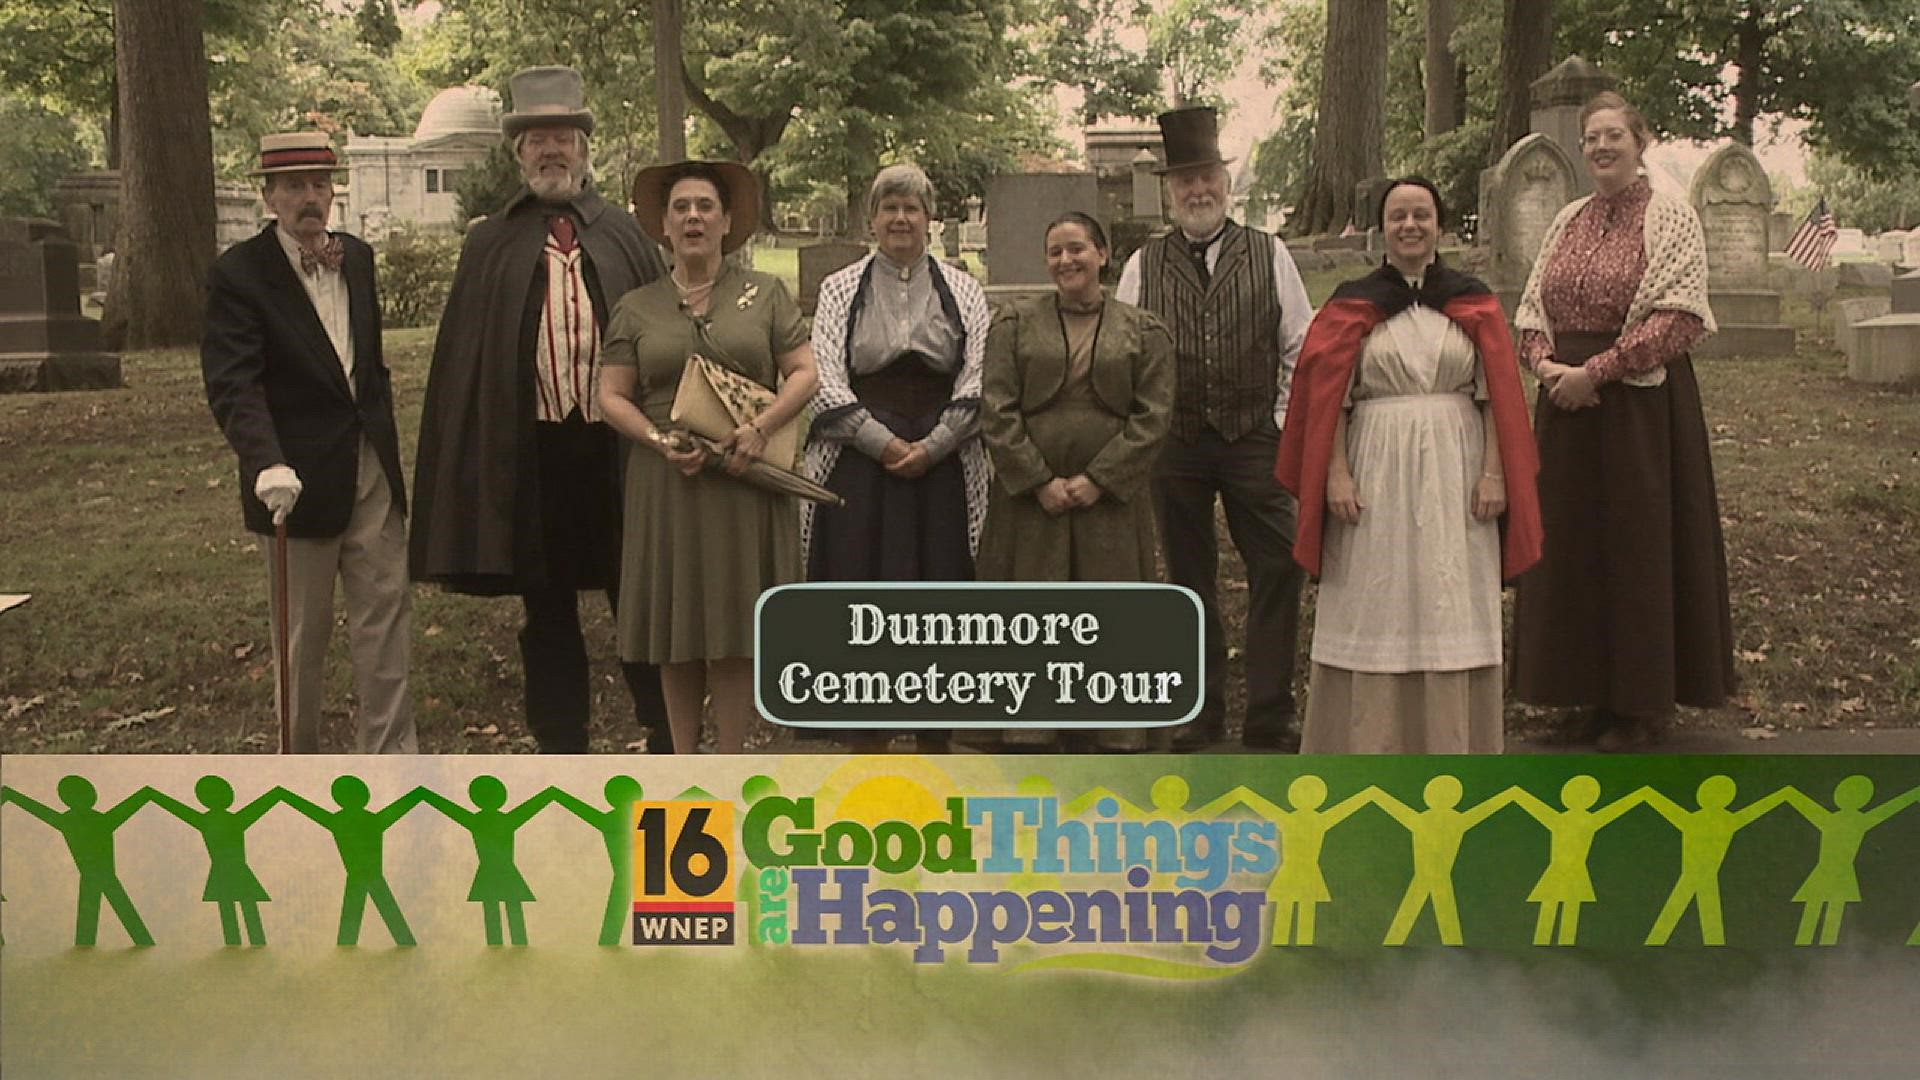 The Dunmore Cemetery Tour